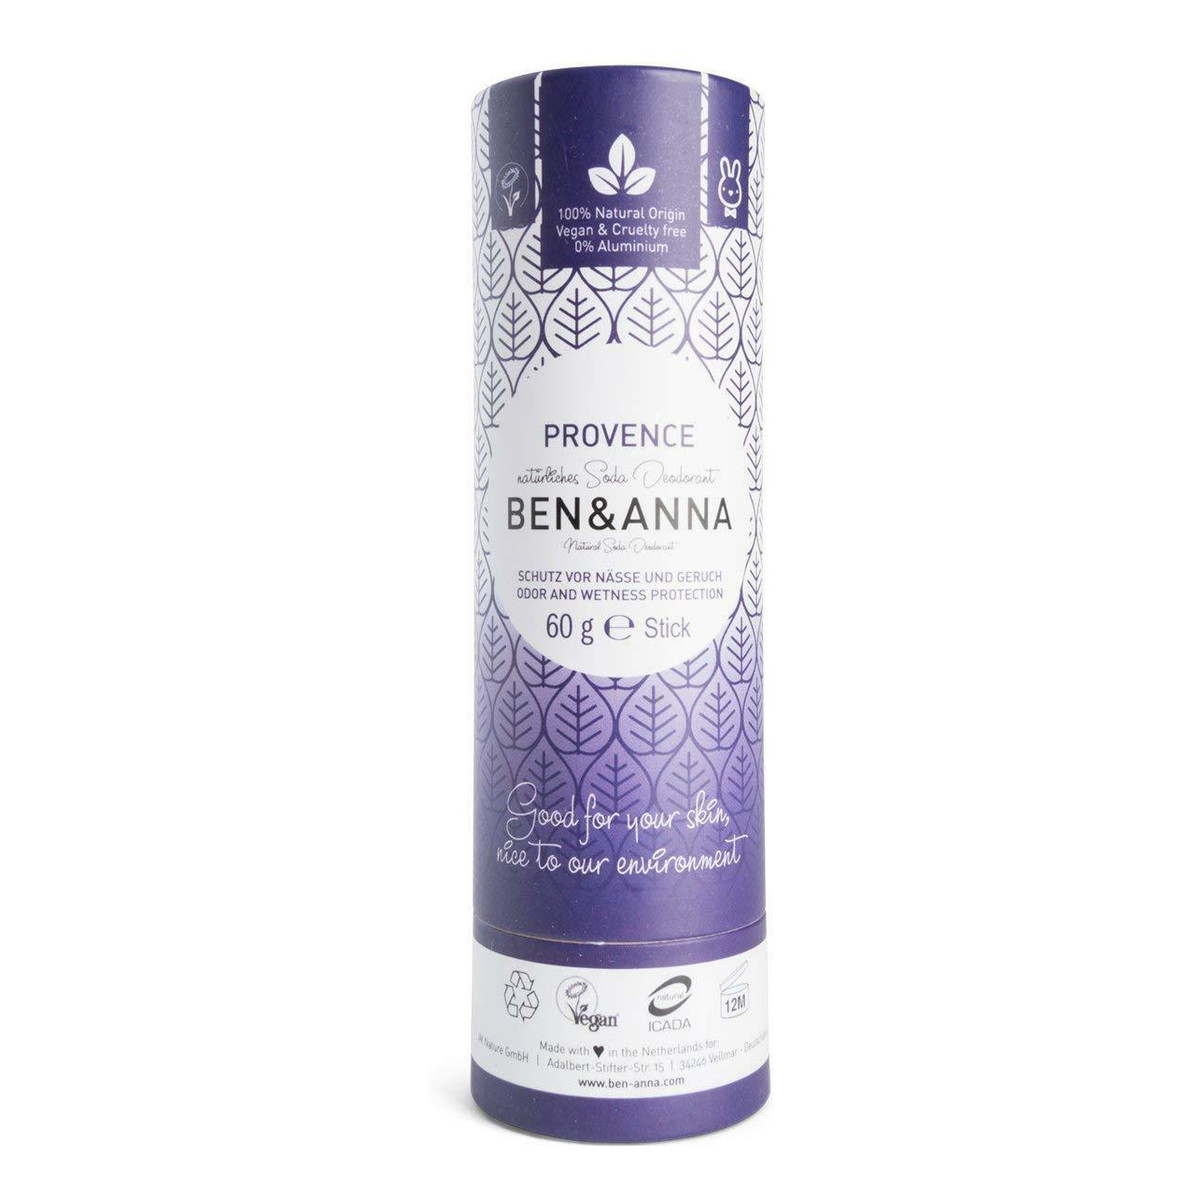 Ben&Anna Natural Soda naturalny dezodorant na bazie sody sztyft kartonowy Provence 60g